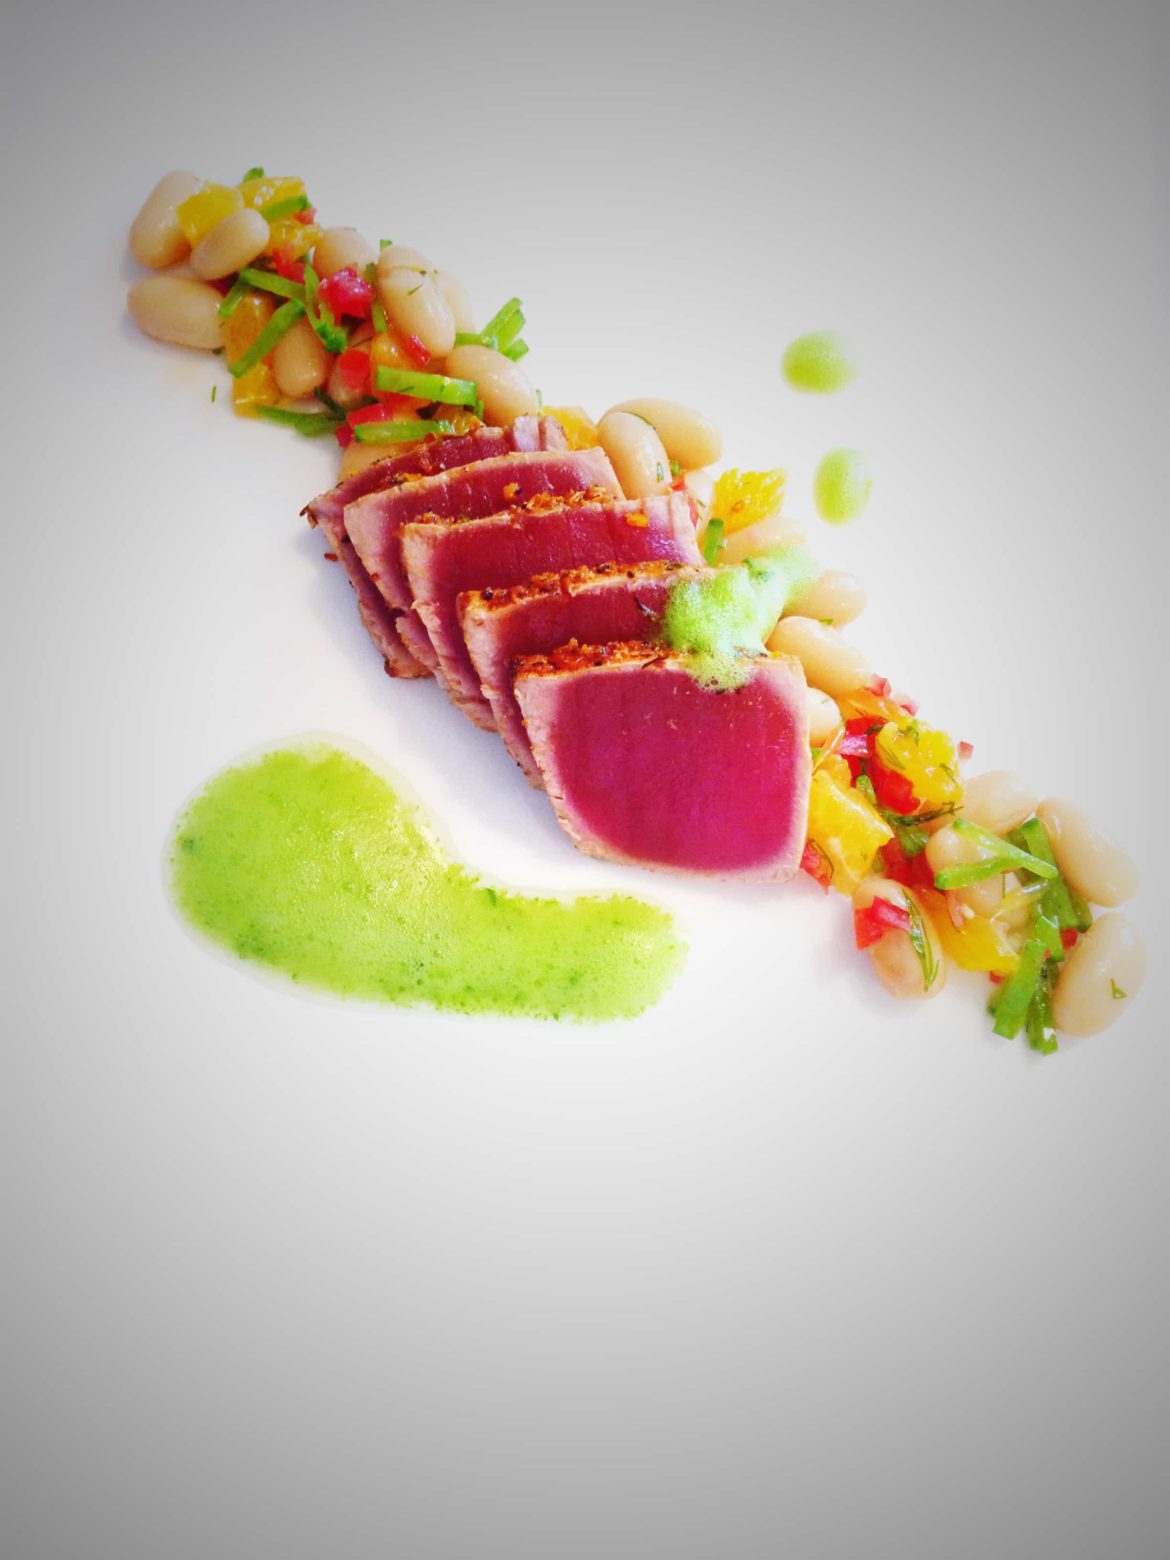 Seared Tuna Plate